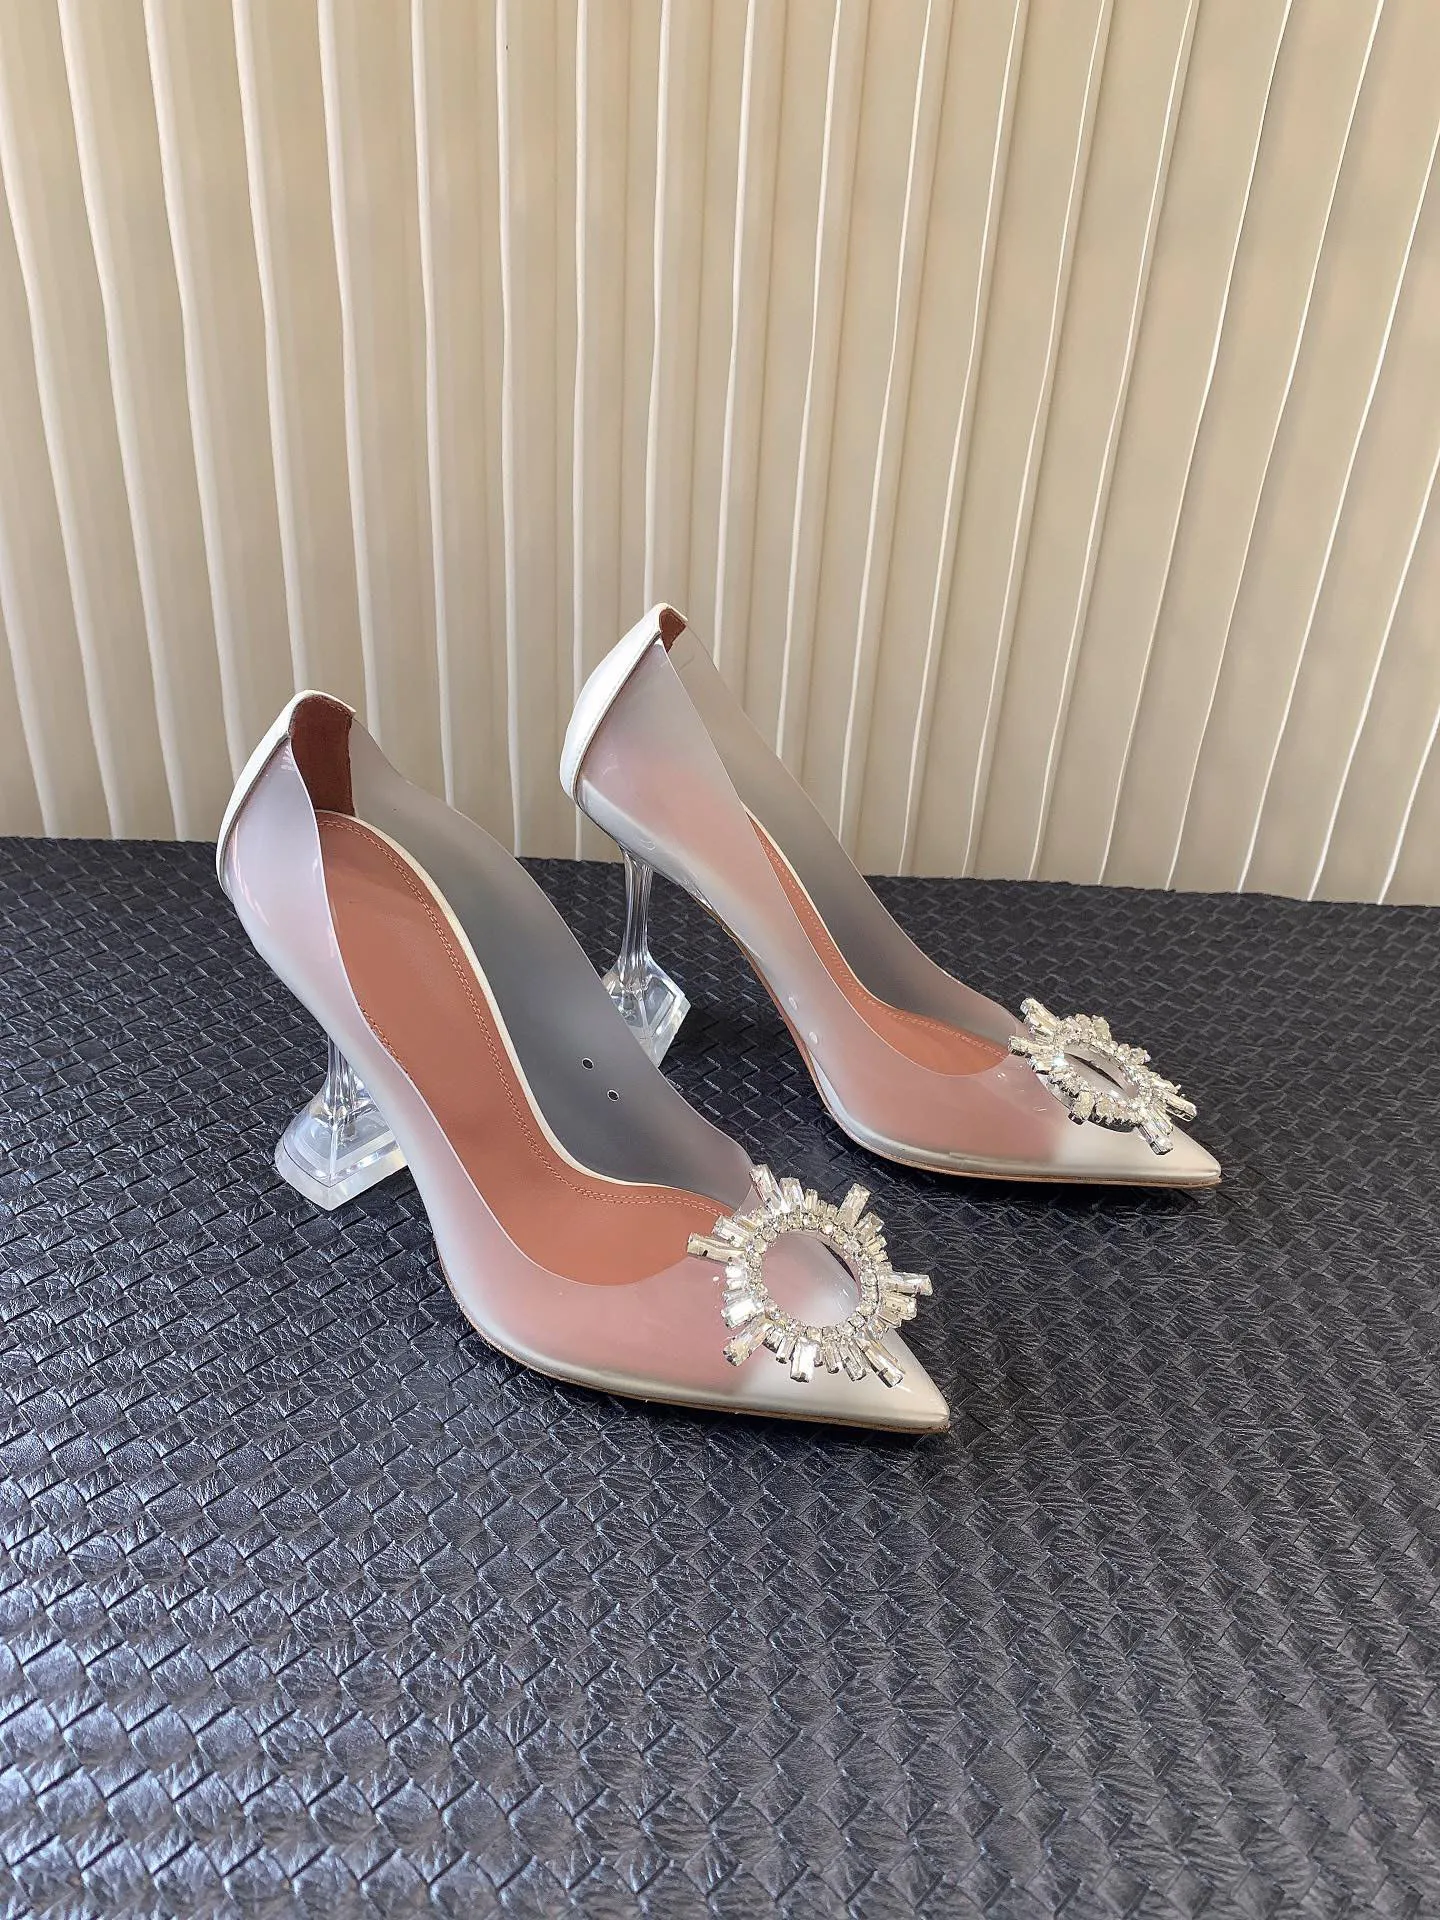 

Women Shoes Begum Glass Pumps Milky Way Pvc 95mm Heel Starbust Embellished Brooch Brand Oeing 8882304231012